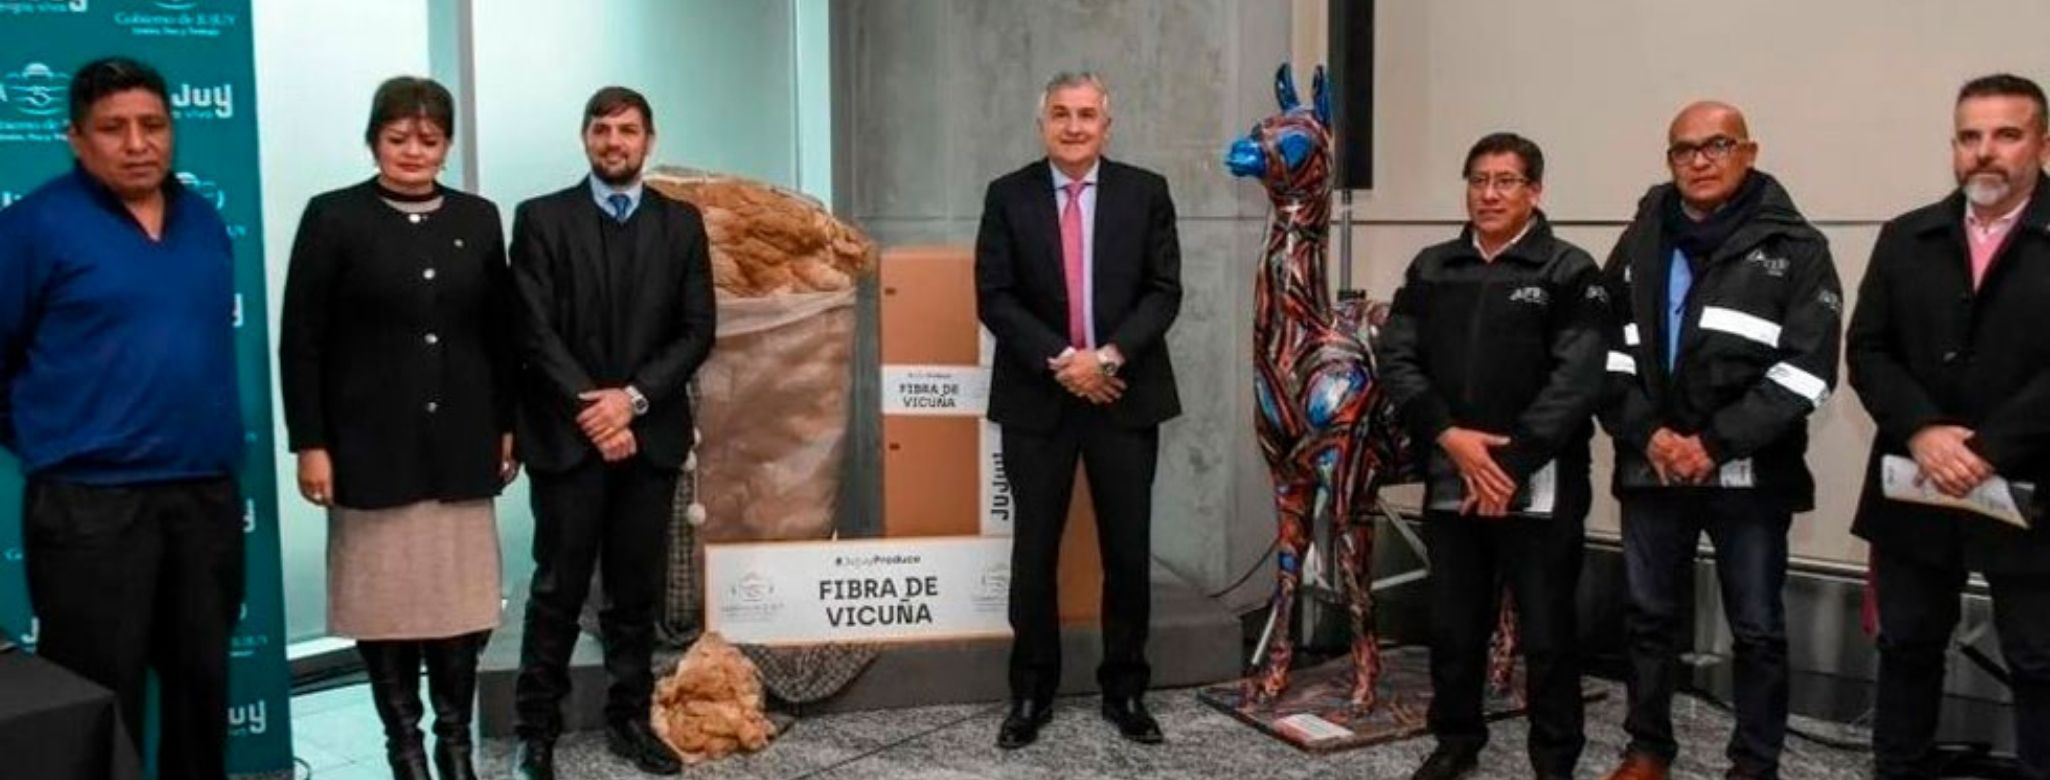 Corresponsalía Jujuy - El Presidente Giacoppo presente en acto de Gobernación